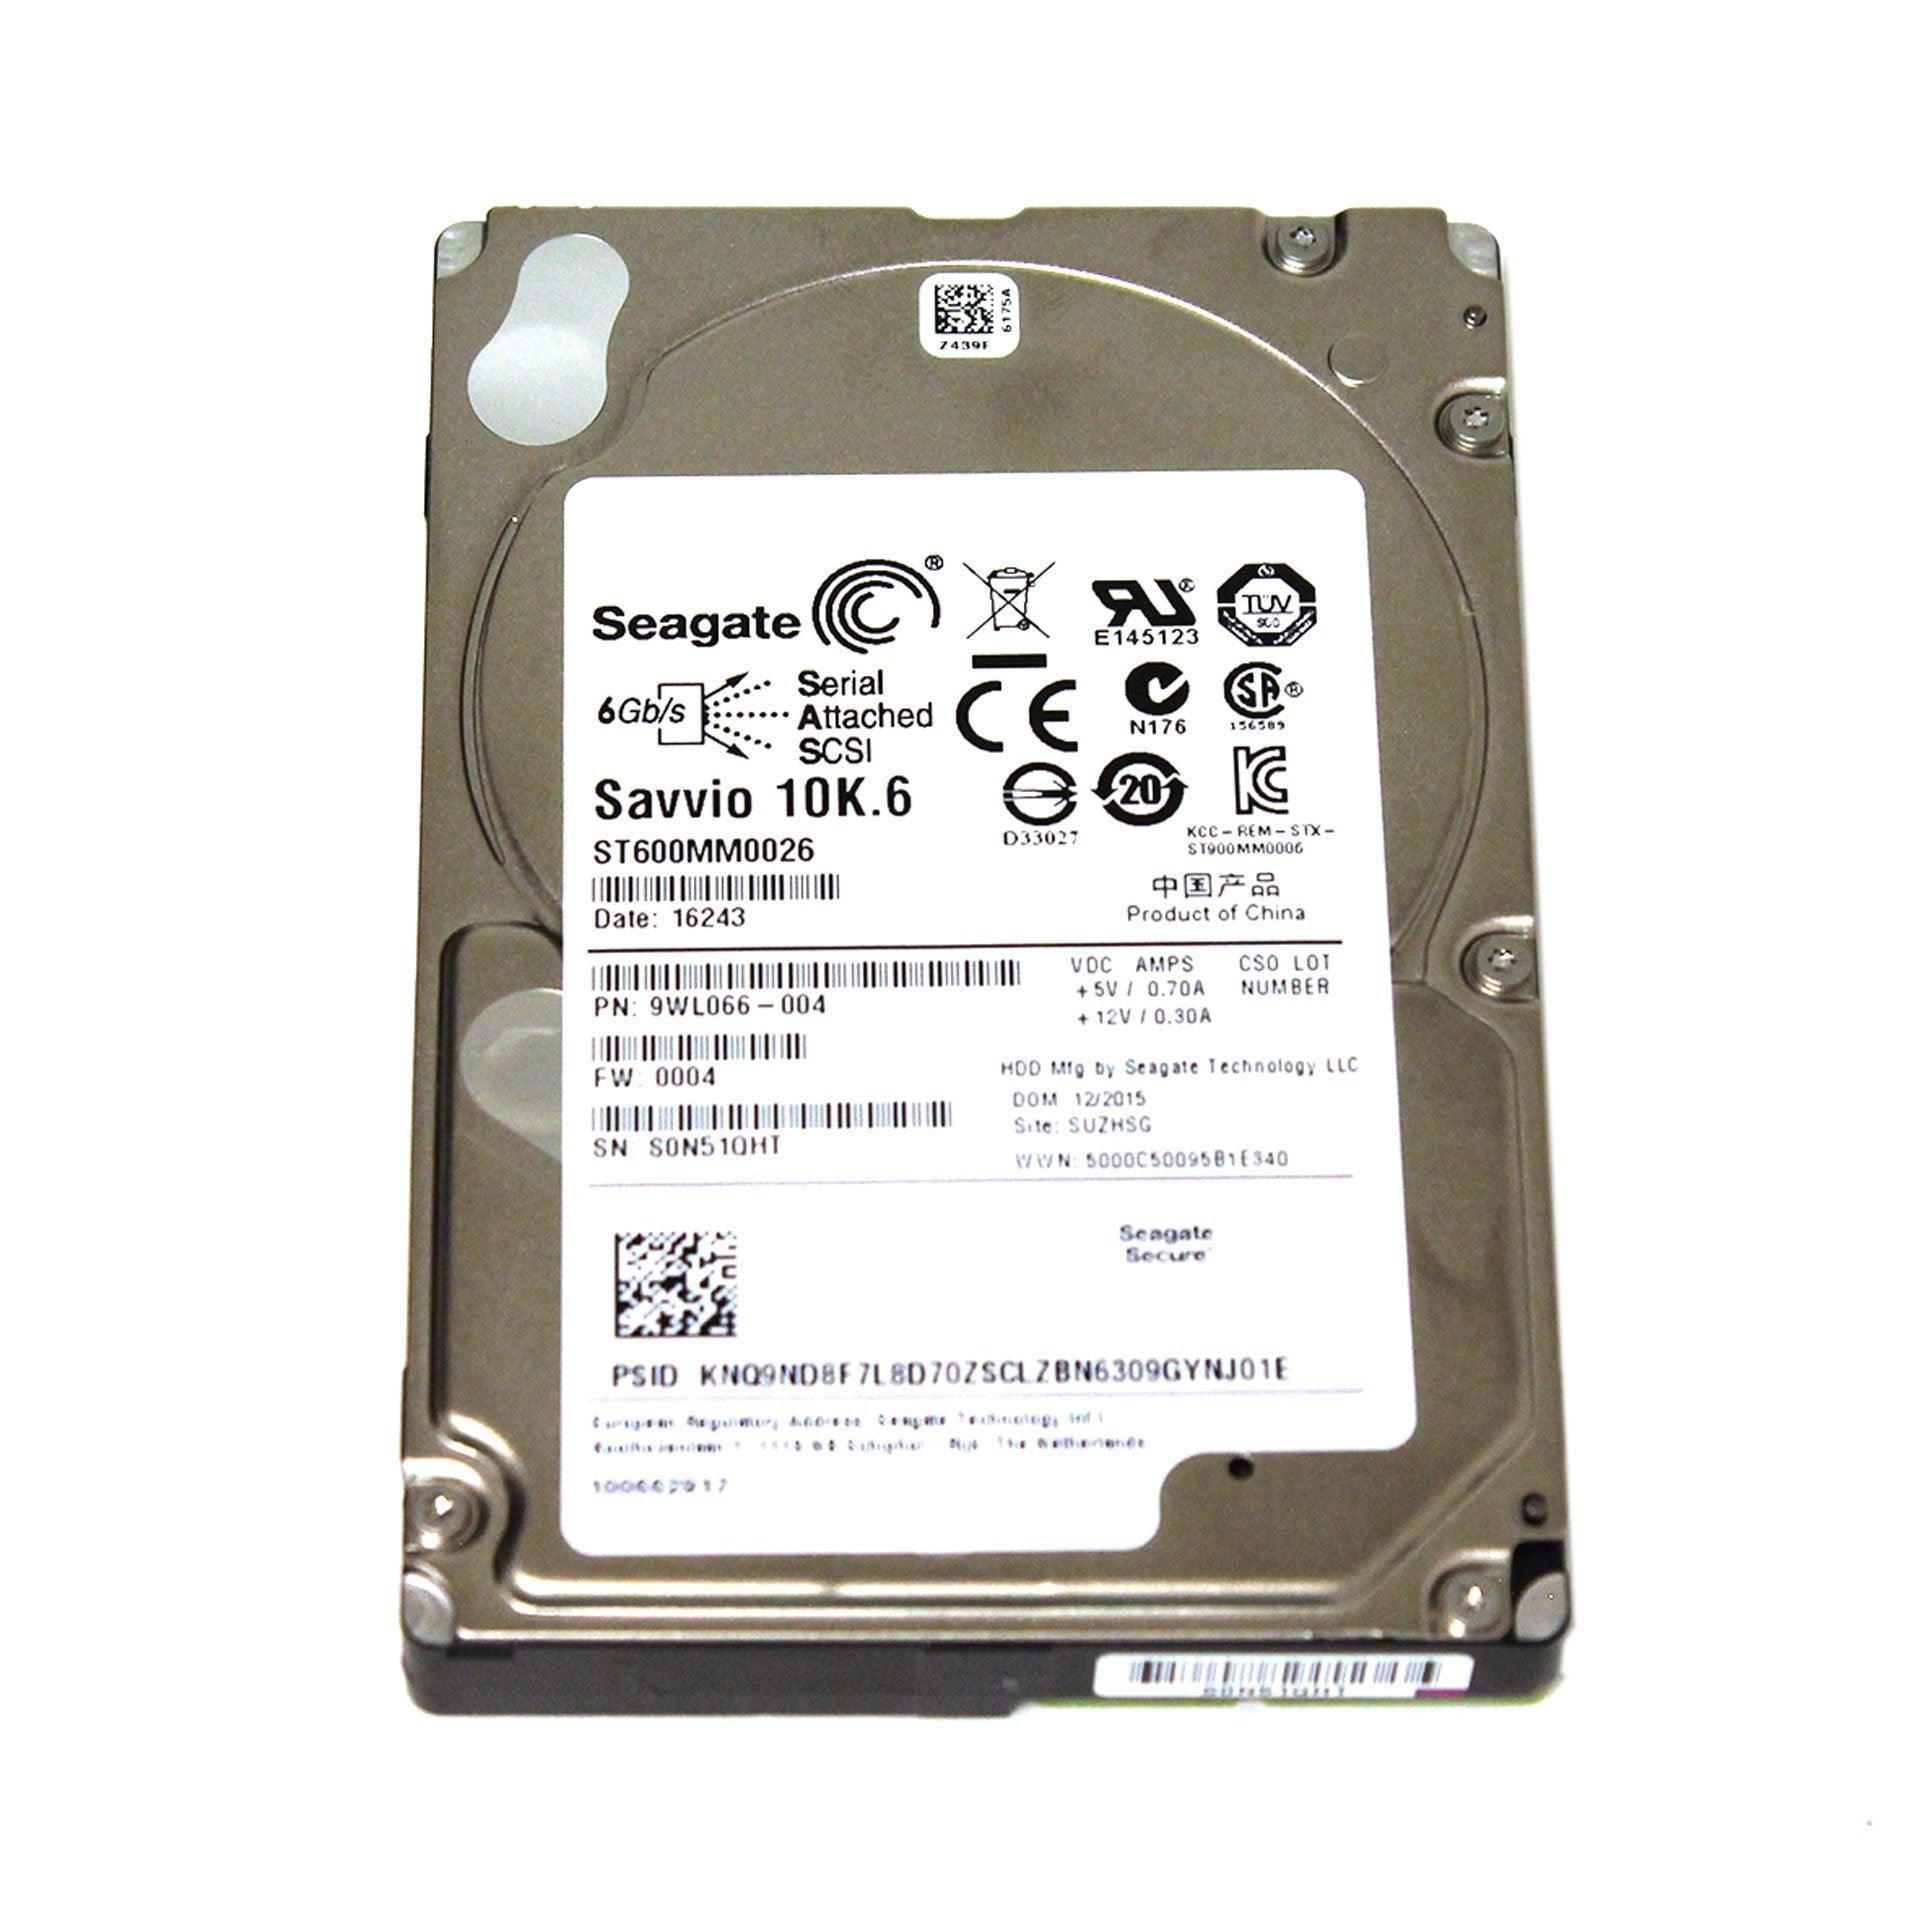 Seagate ST600MM0026 10K.6 600GB 10K 2.5″ SED SAS Hard Drive